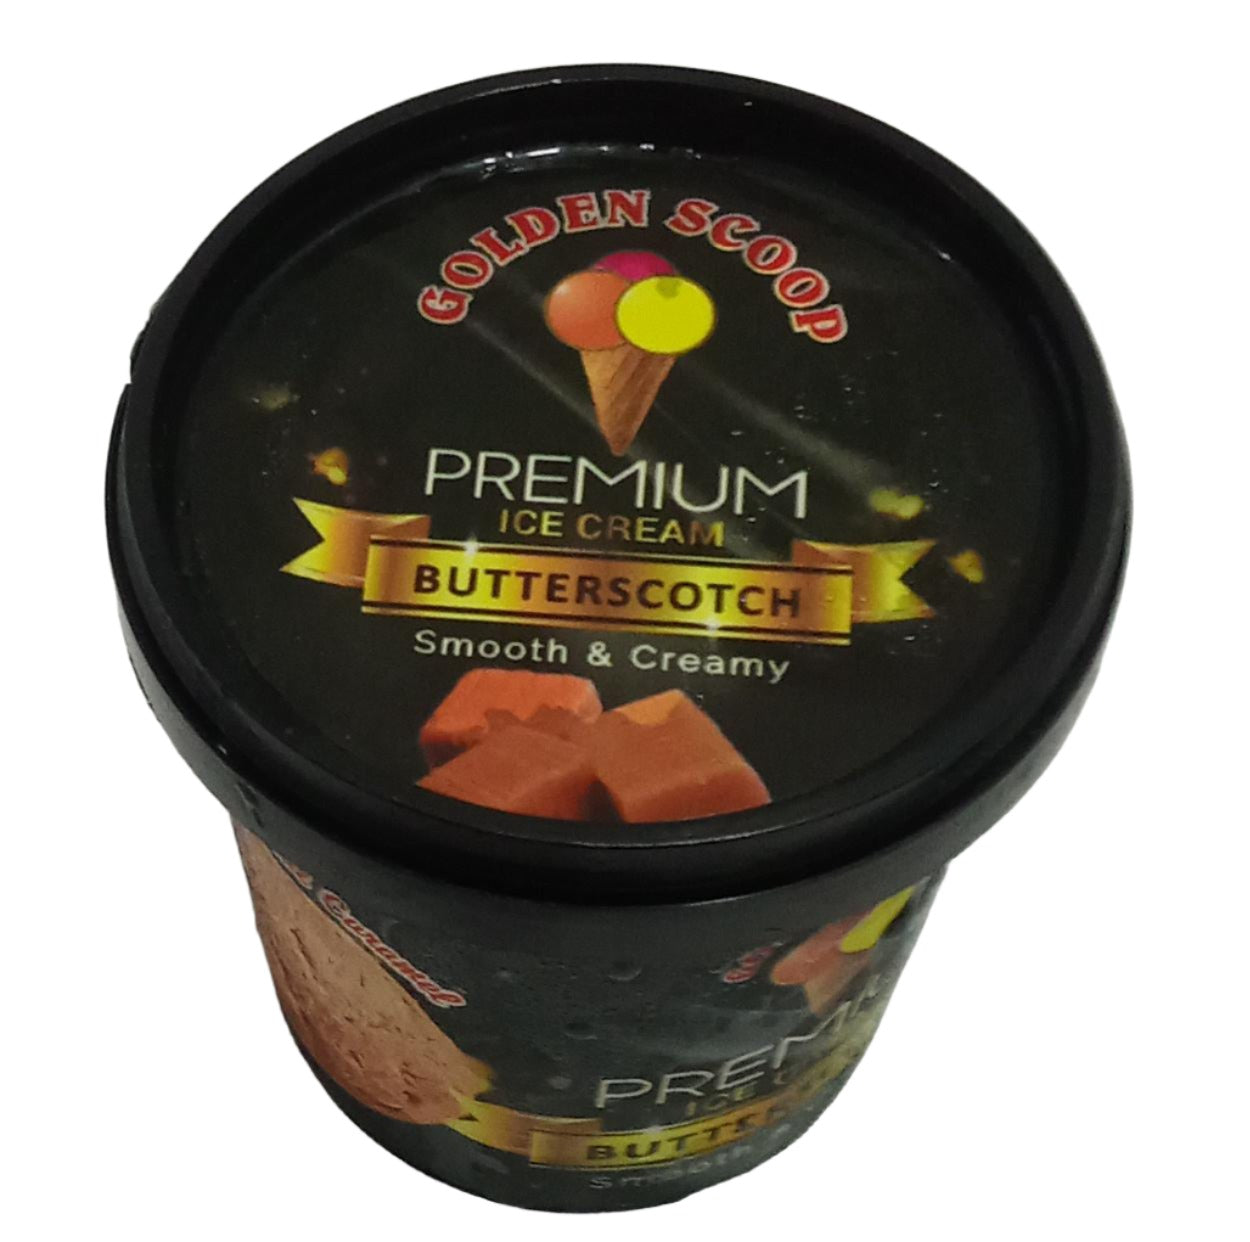 Golden Scoop Premium Butterscotch Icecream | PVT42a